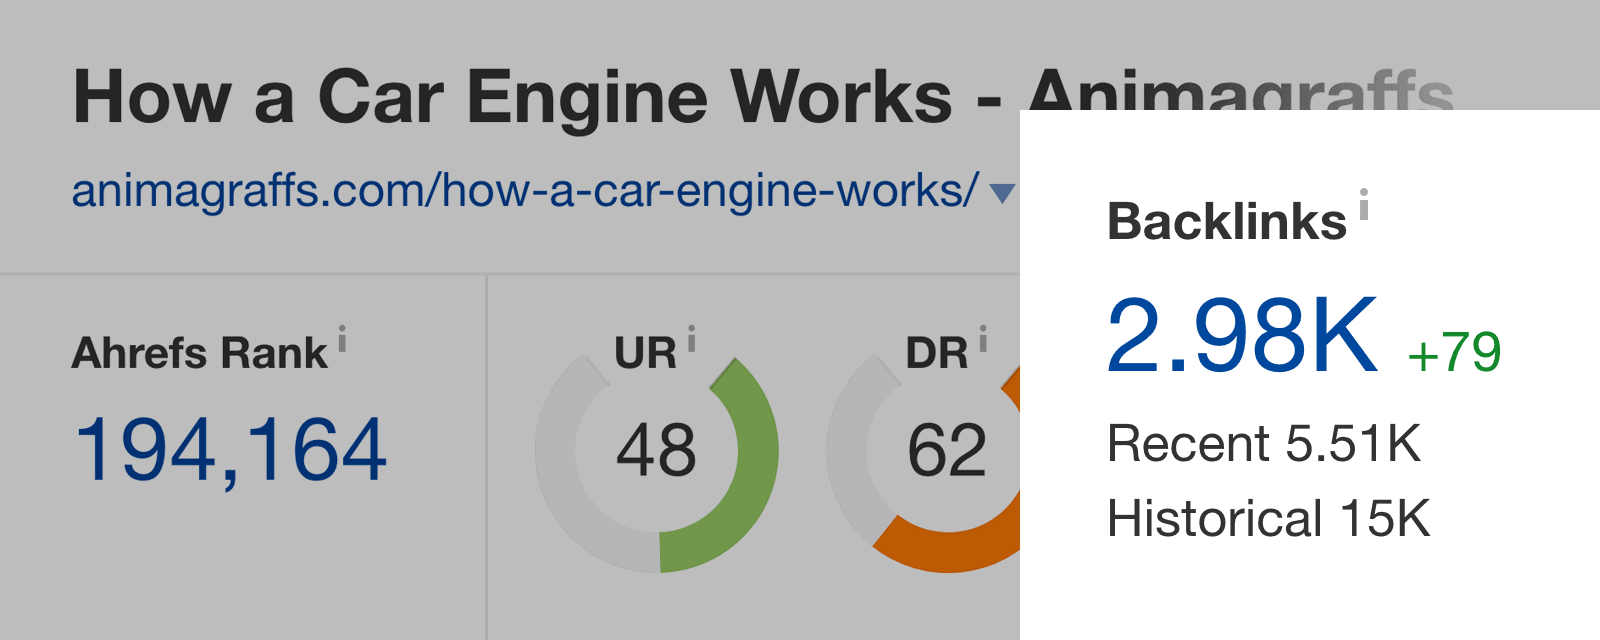 How a Car Engine Works – Backlinks